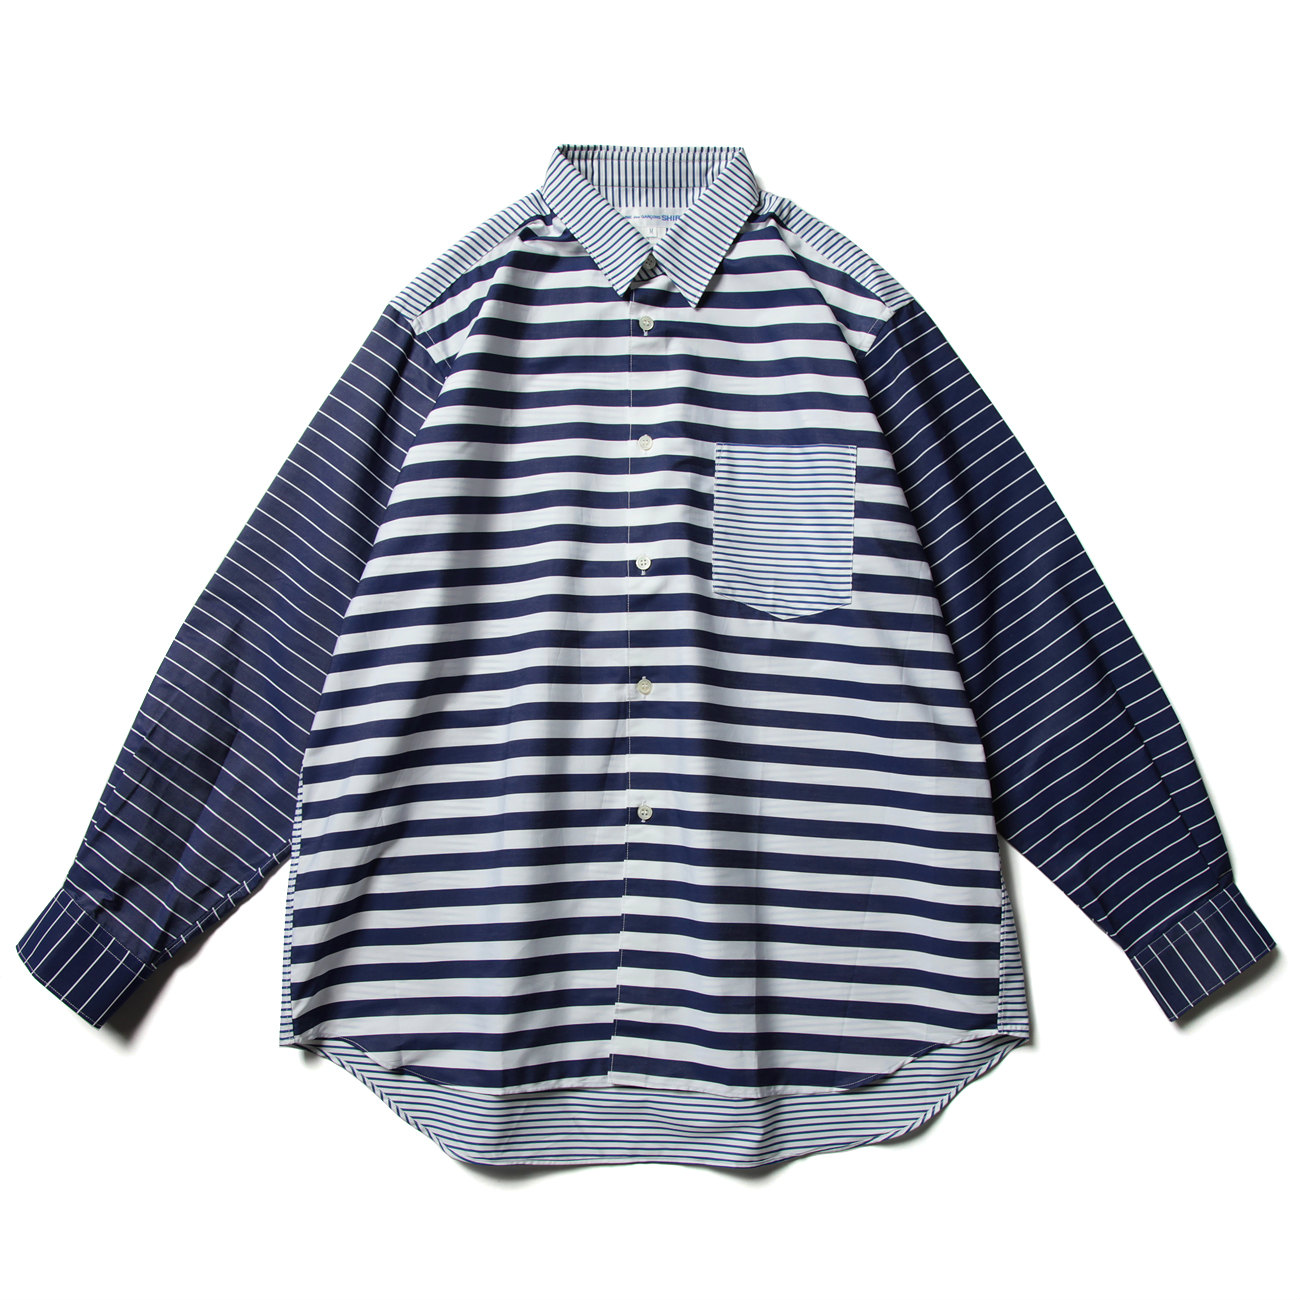 COMME des GARCONS SHIRT Stripe Shirtストライプシャツブラウス